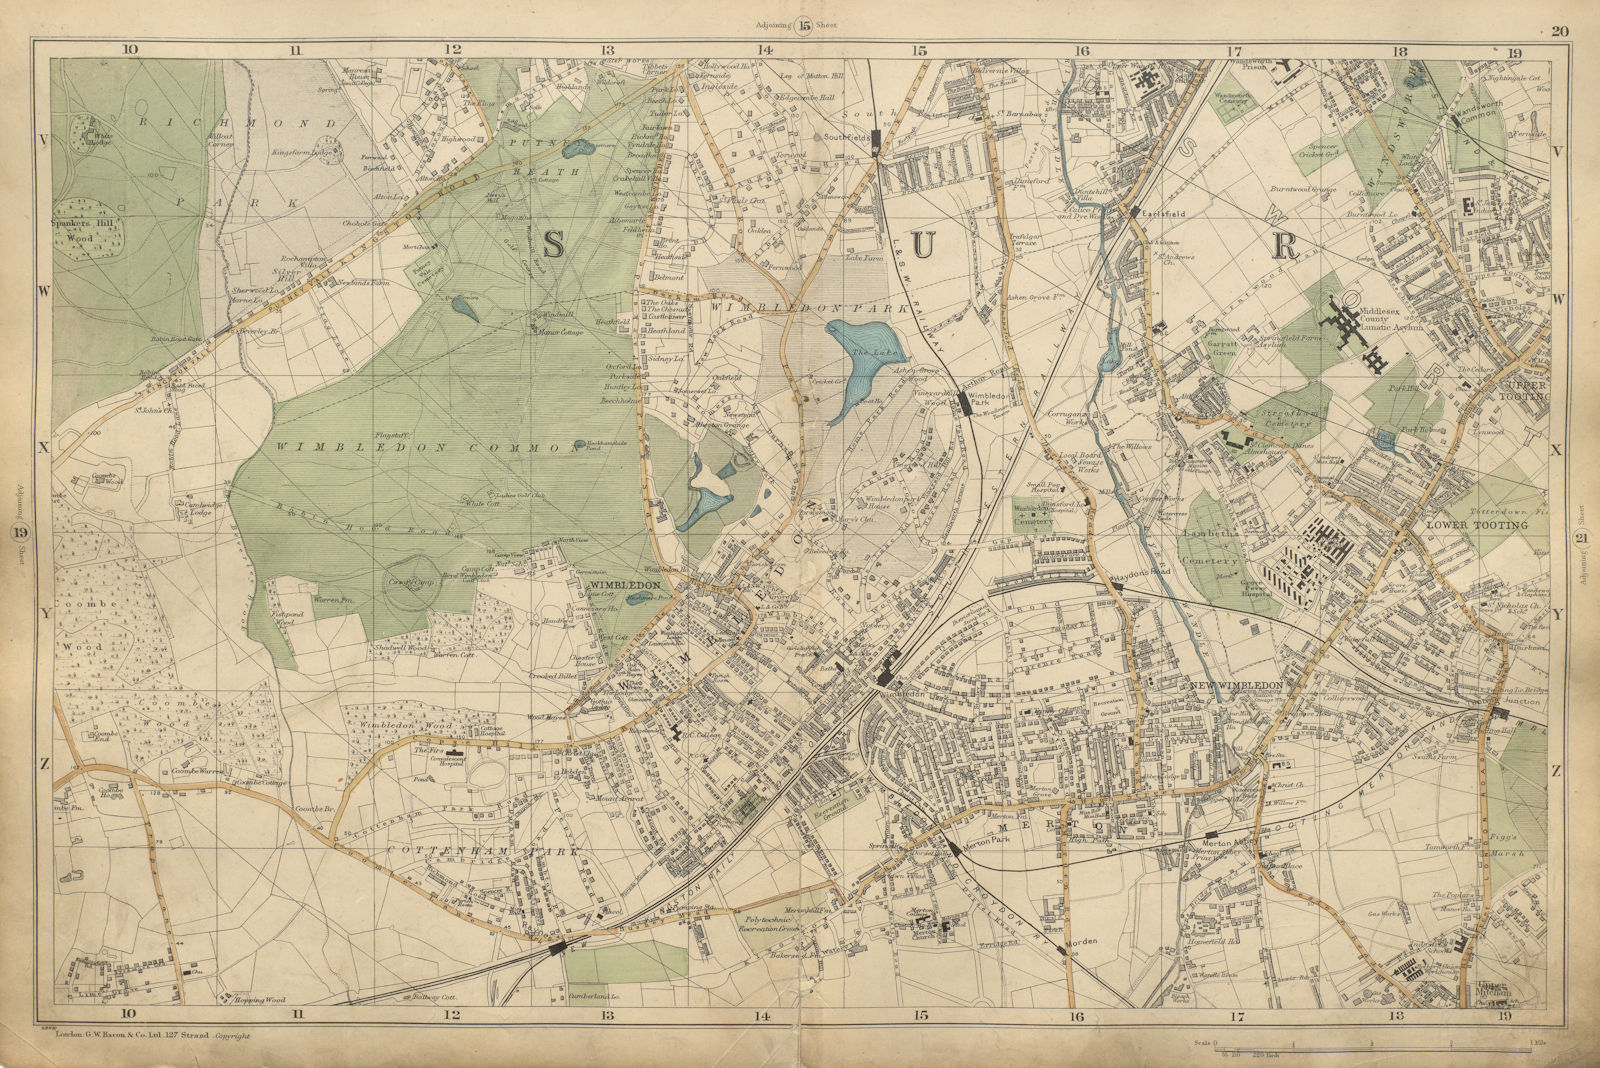 WIMBLEDON Tooting Merton Putney Heath Southfields Cottenham Park BACON 1900 map